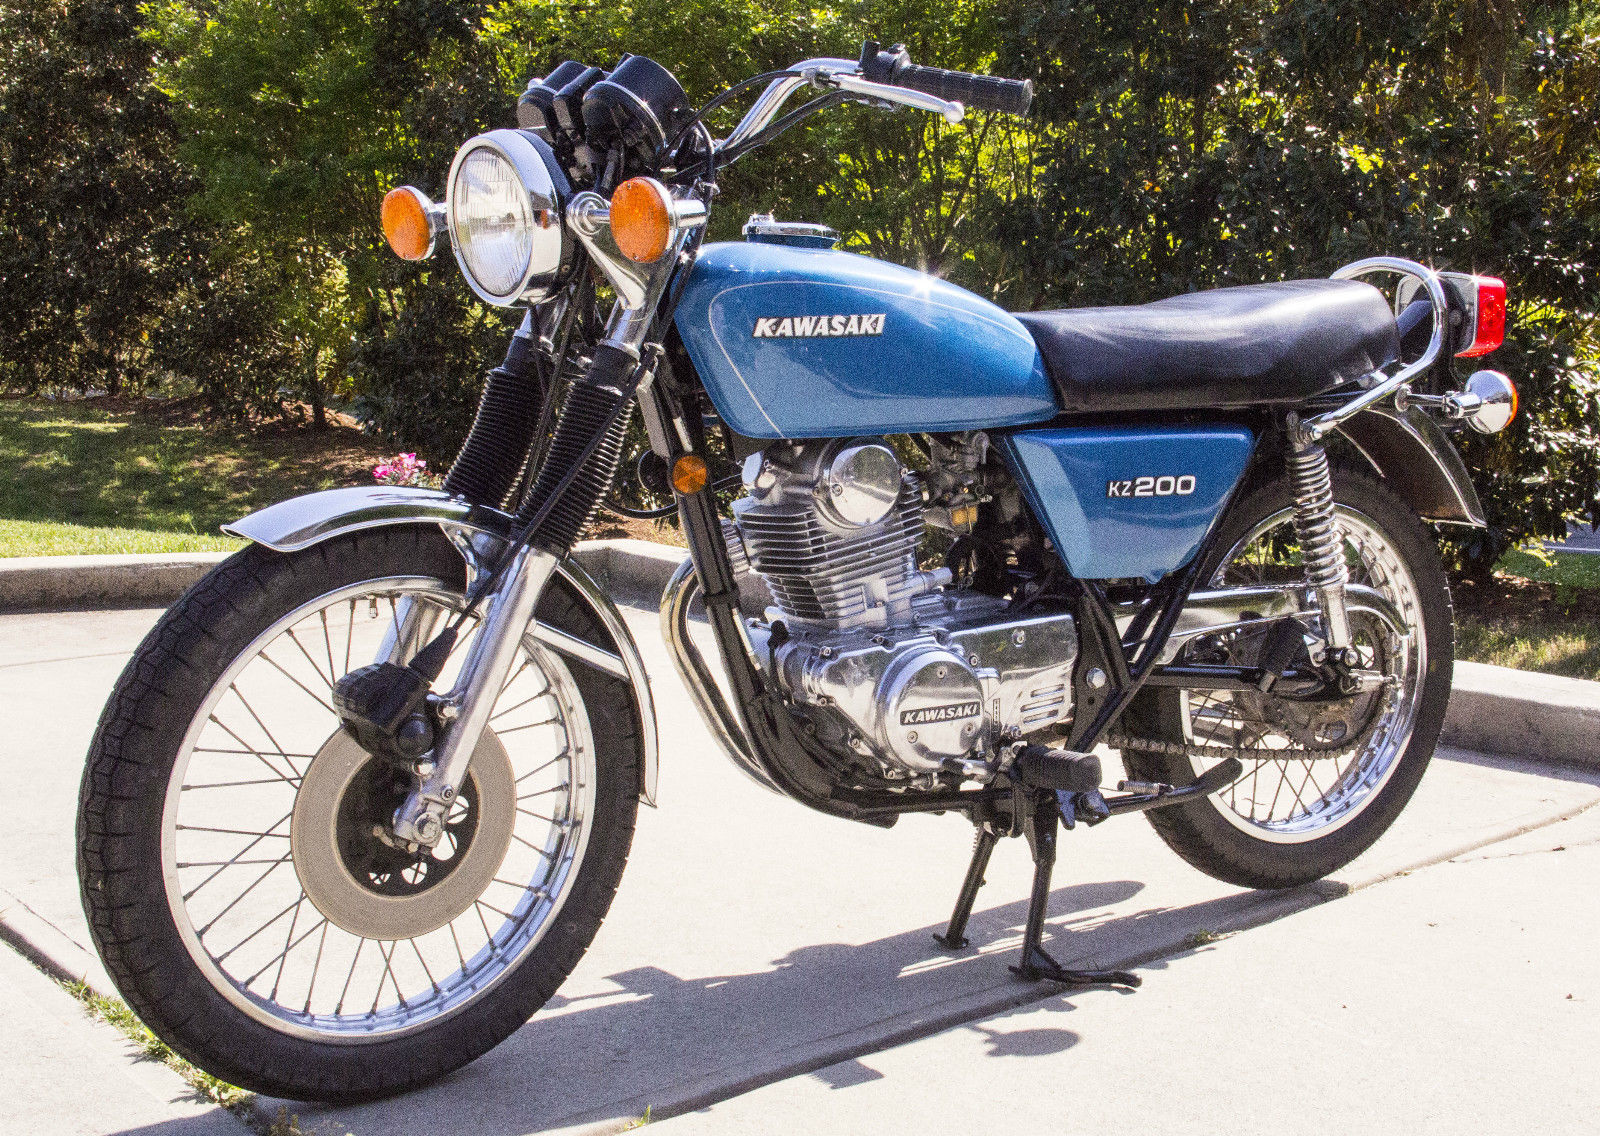 Restored Kawasaki 1977 Photographs at Restored |Bikes Restored